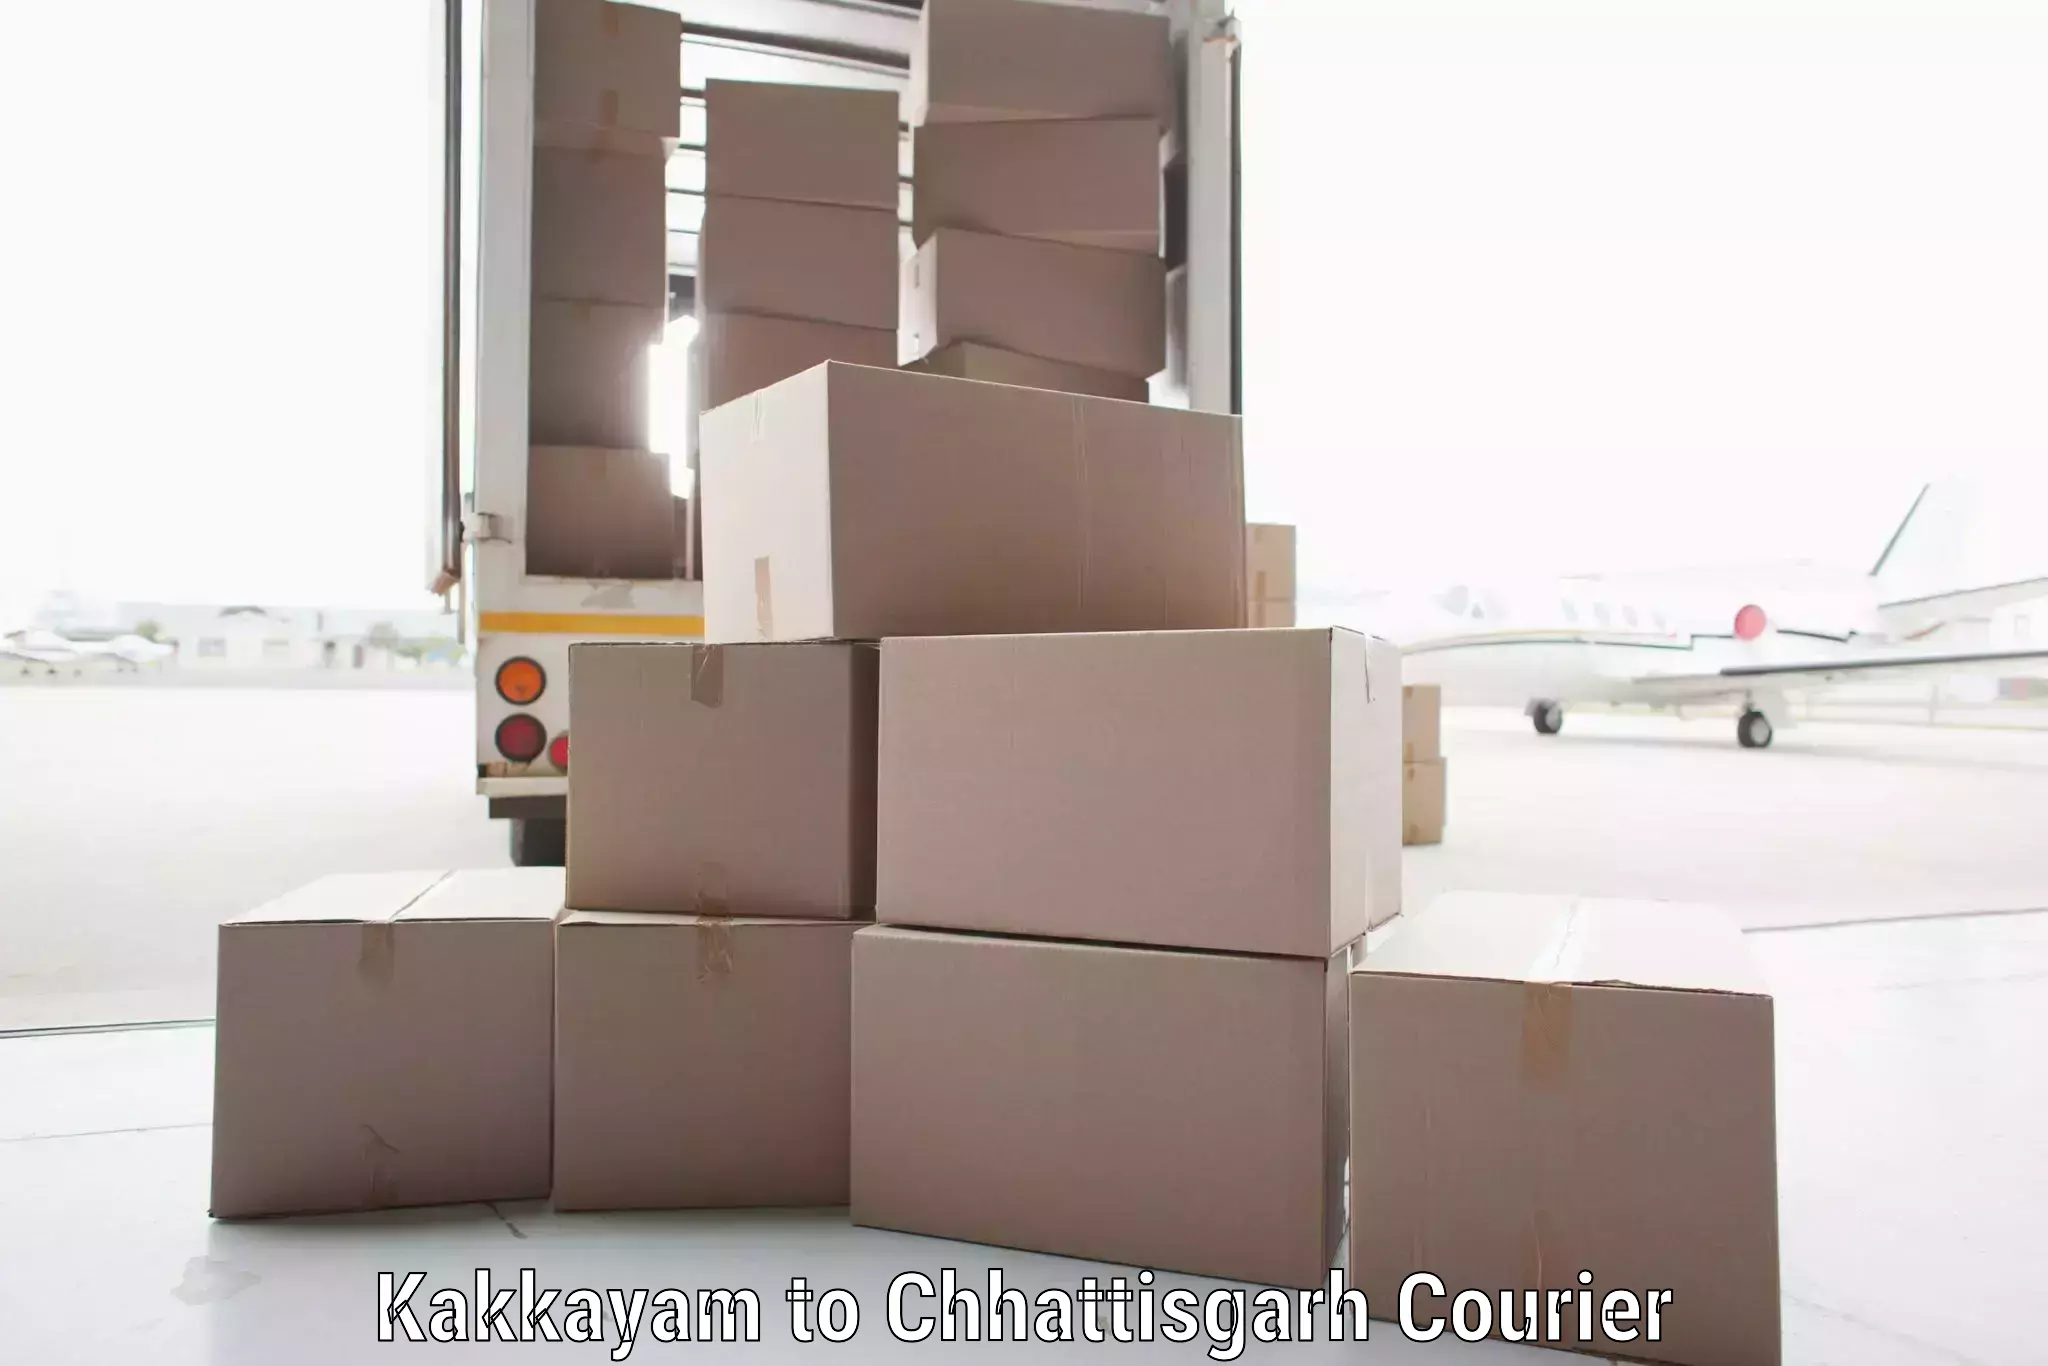 Round-the-clock parcel delivery Kakkayam to Chhattisgarh